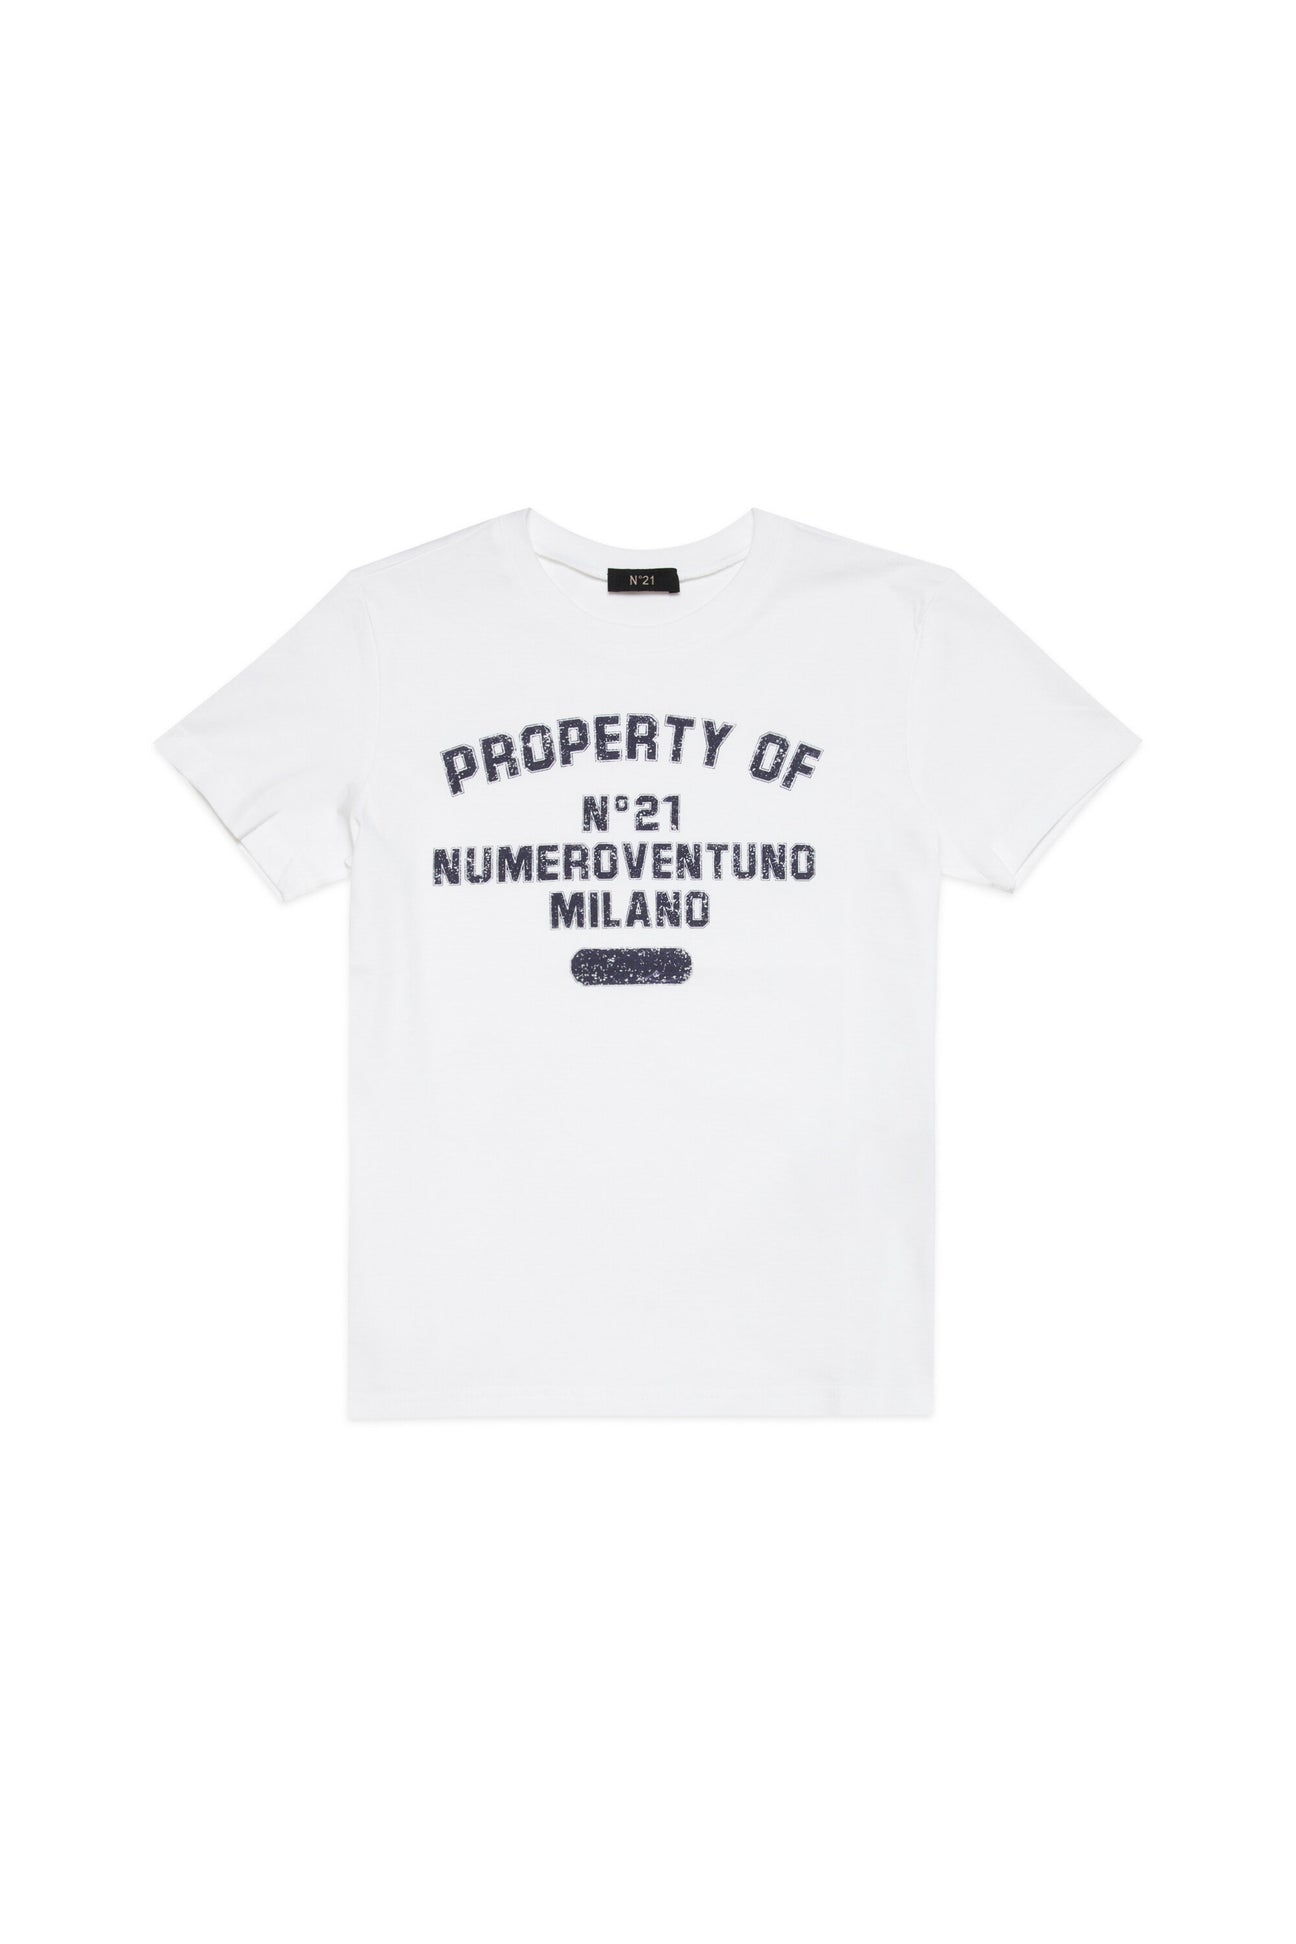 Camiseta con marca Property of N°21 